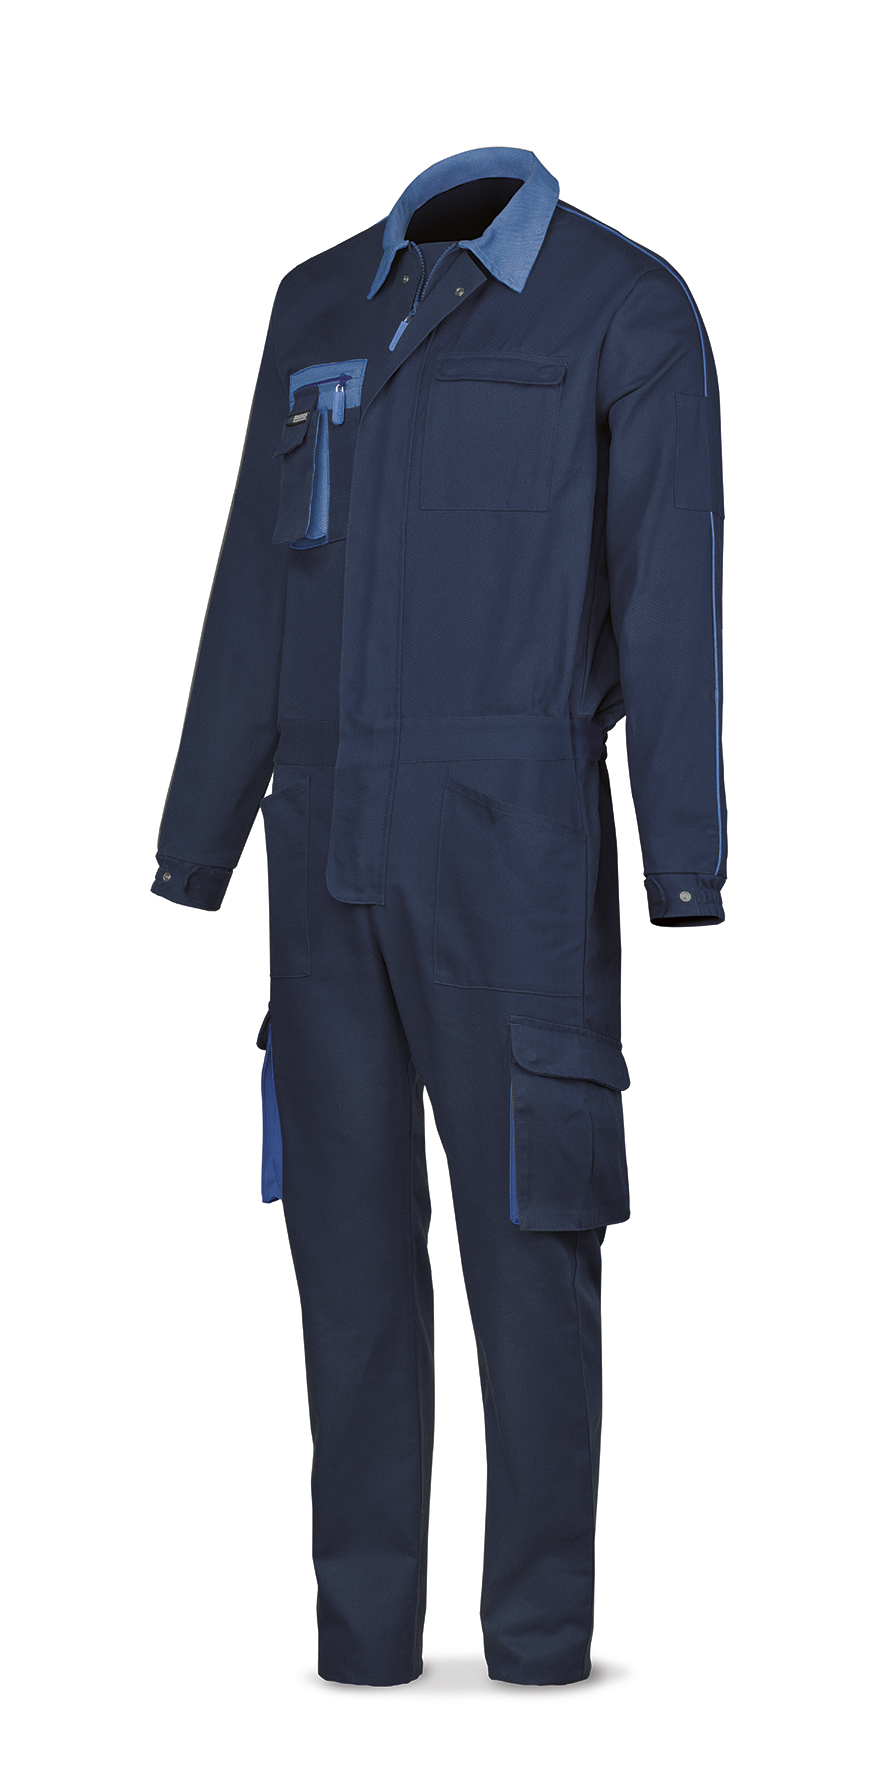 488-BSUPTOPAM Vestuario Laboral Serie SuperTop Buzo azul marino algodón de 270 g. Multibolsillos